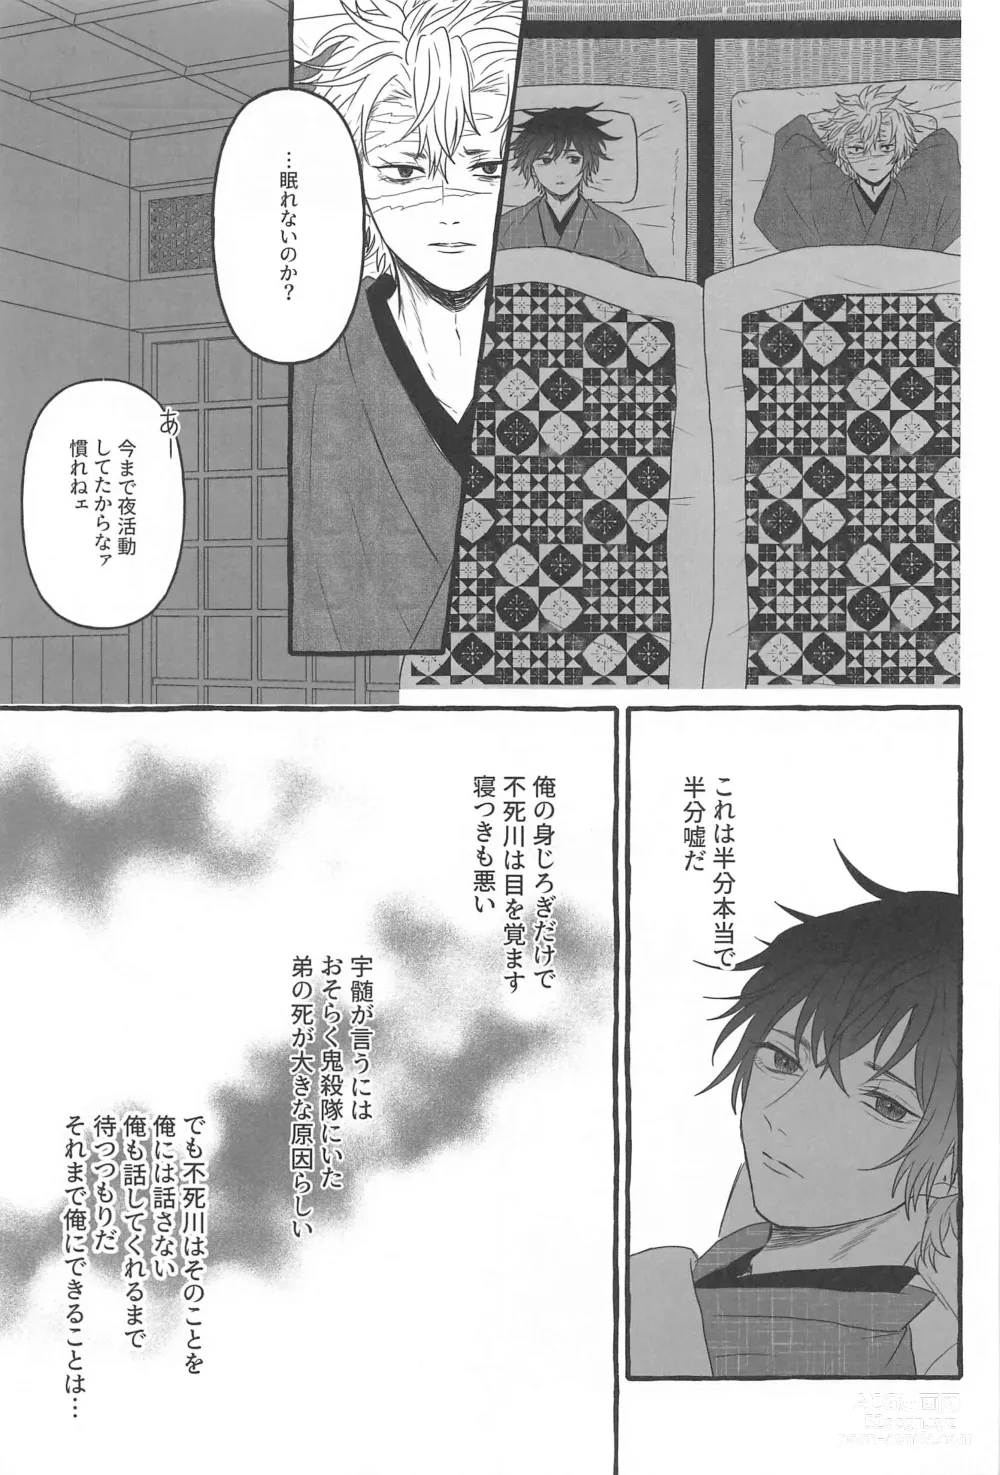 Page 4 of doujinshi Hiruma no Hoshi o Sagashite - Looking for stars in the daytime